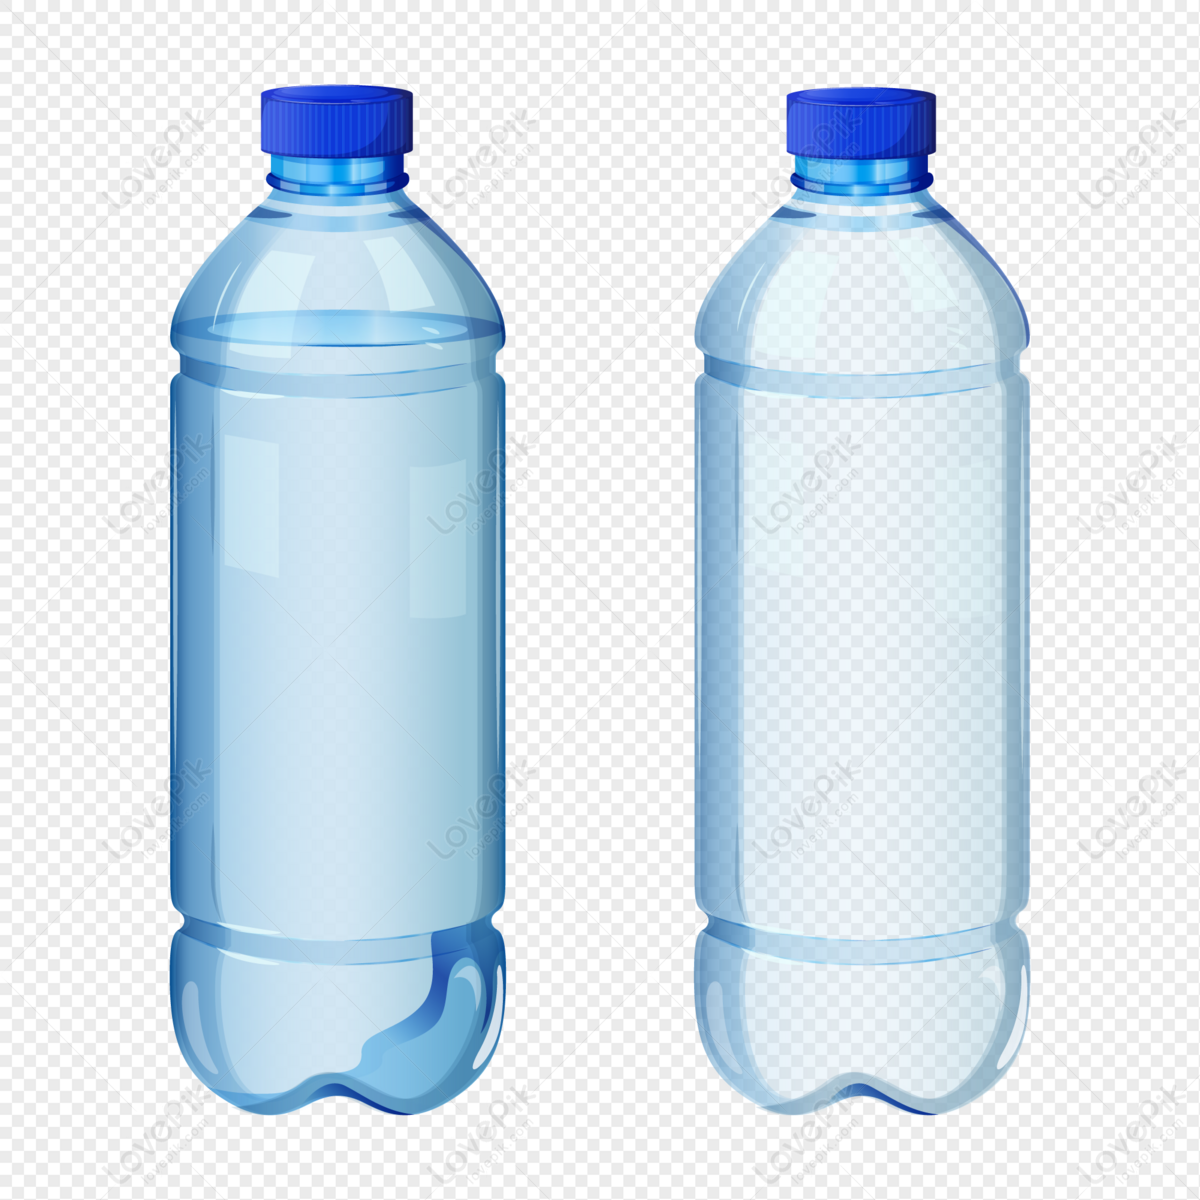 https://img.lovepik.com/free-png/20210922/lovepik-transparent-water-bottle-vector-png-image_401104897_wh1200.png